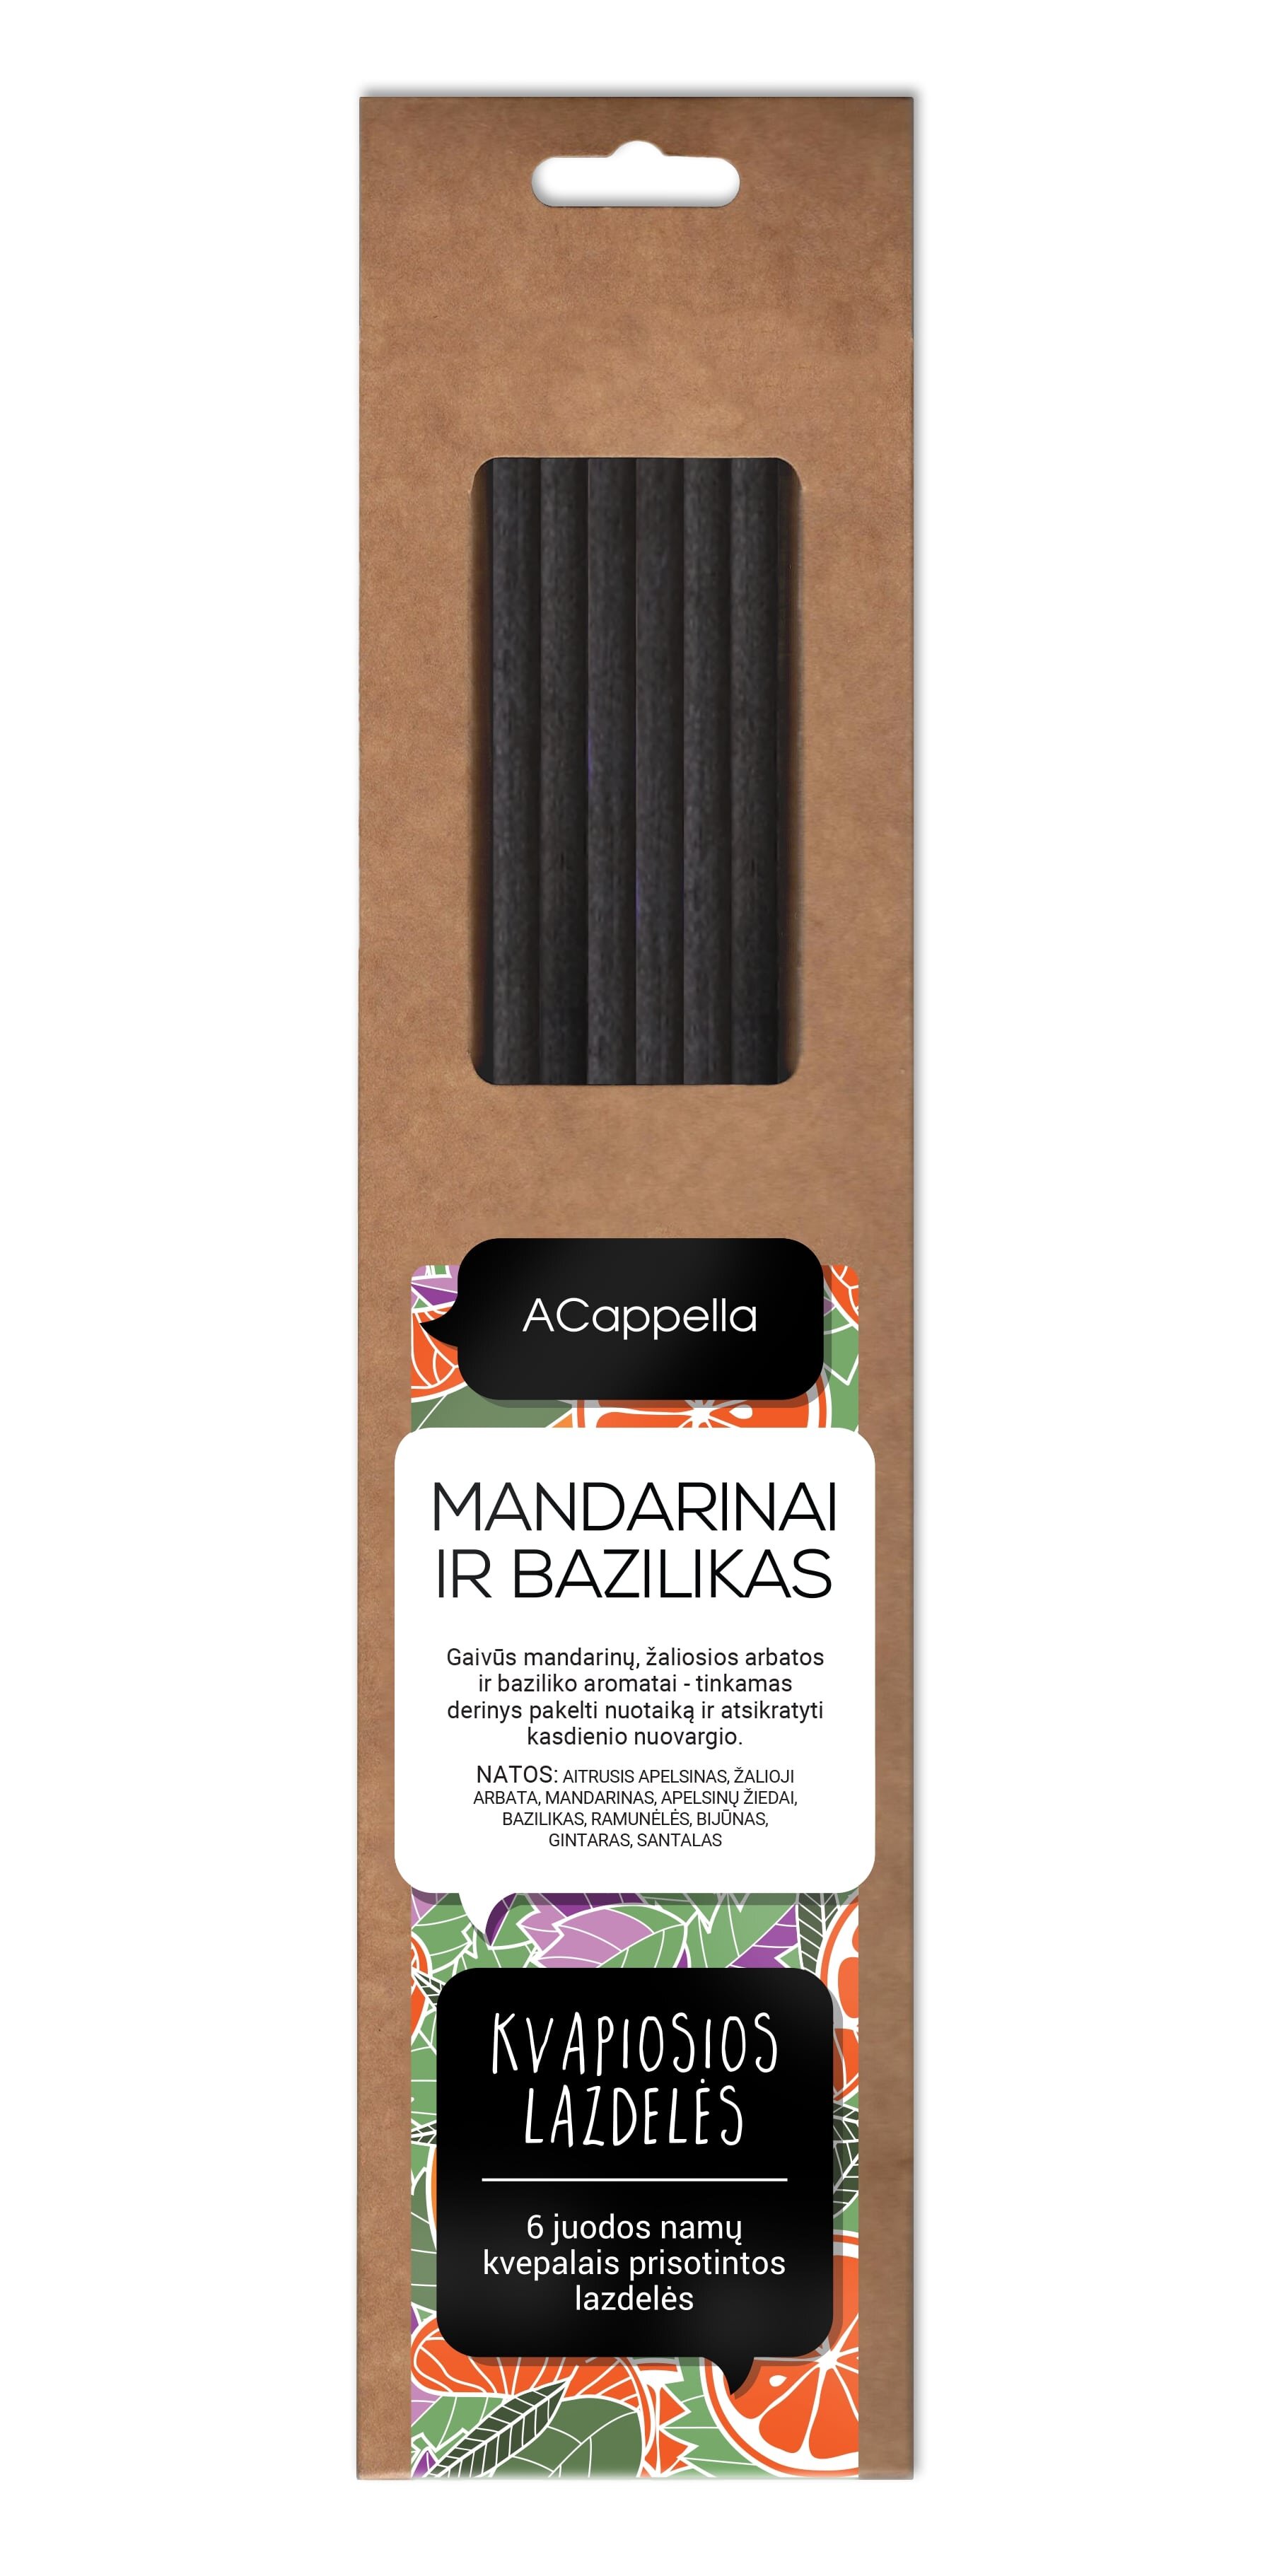 Kvapiosios lazdelės ACappella Mandarinai and bazilikas kaina | pigu.lt